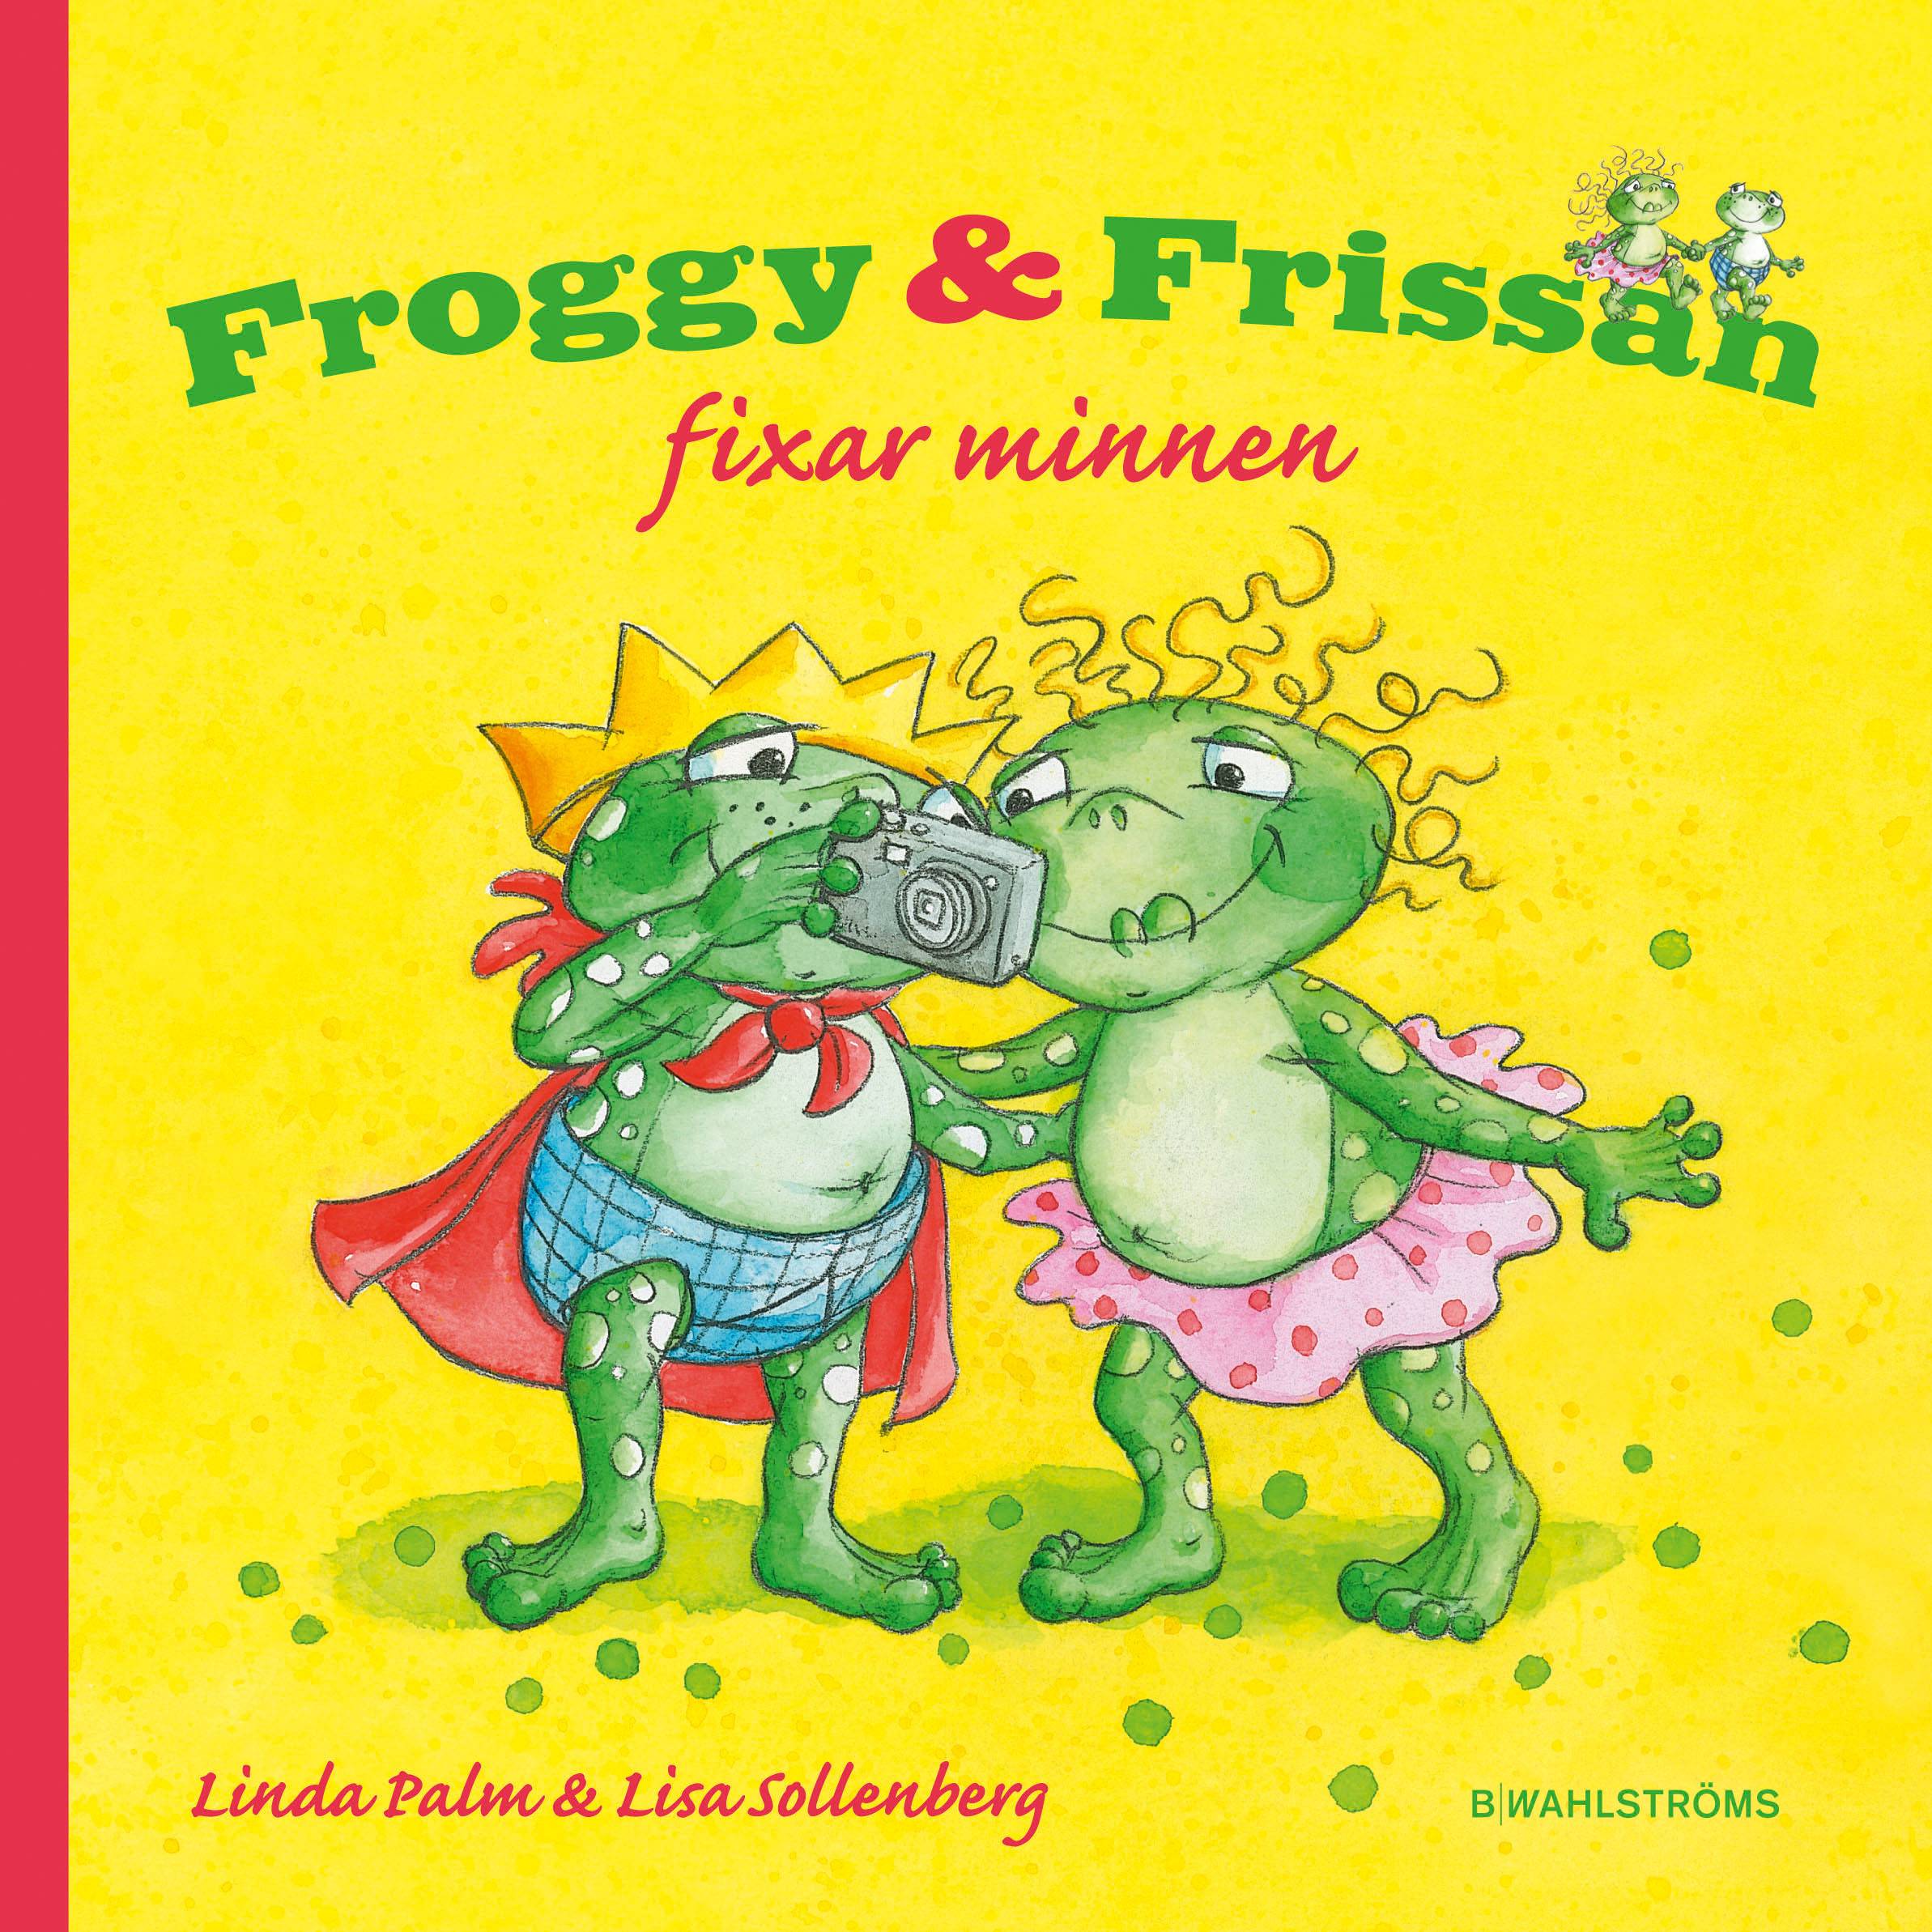 Froggy & Frissan fixar minnen